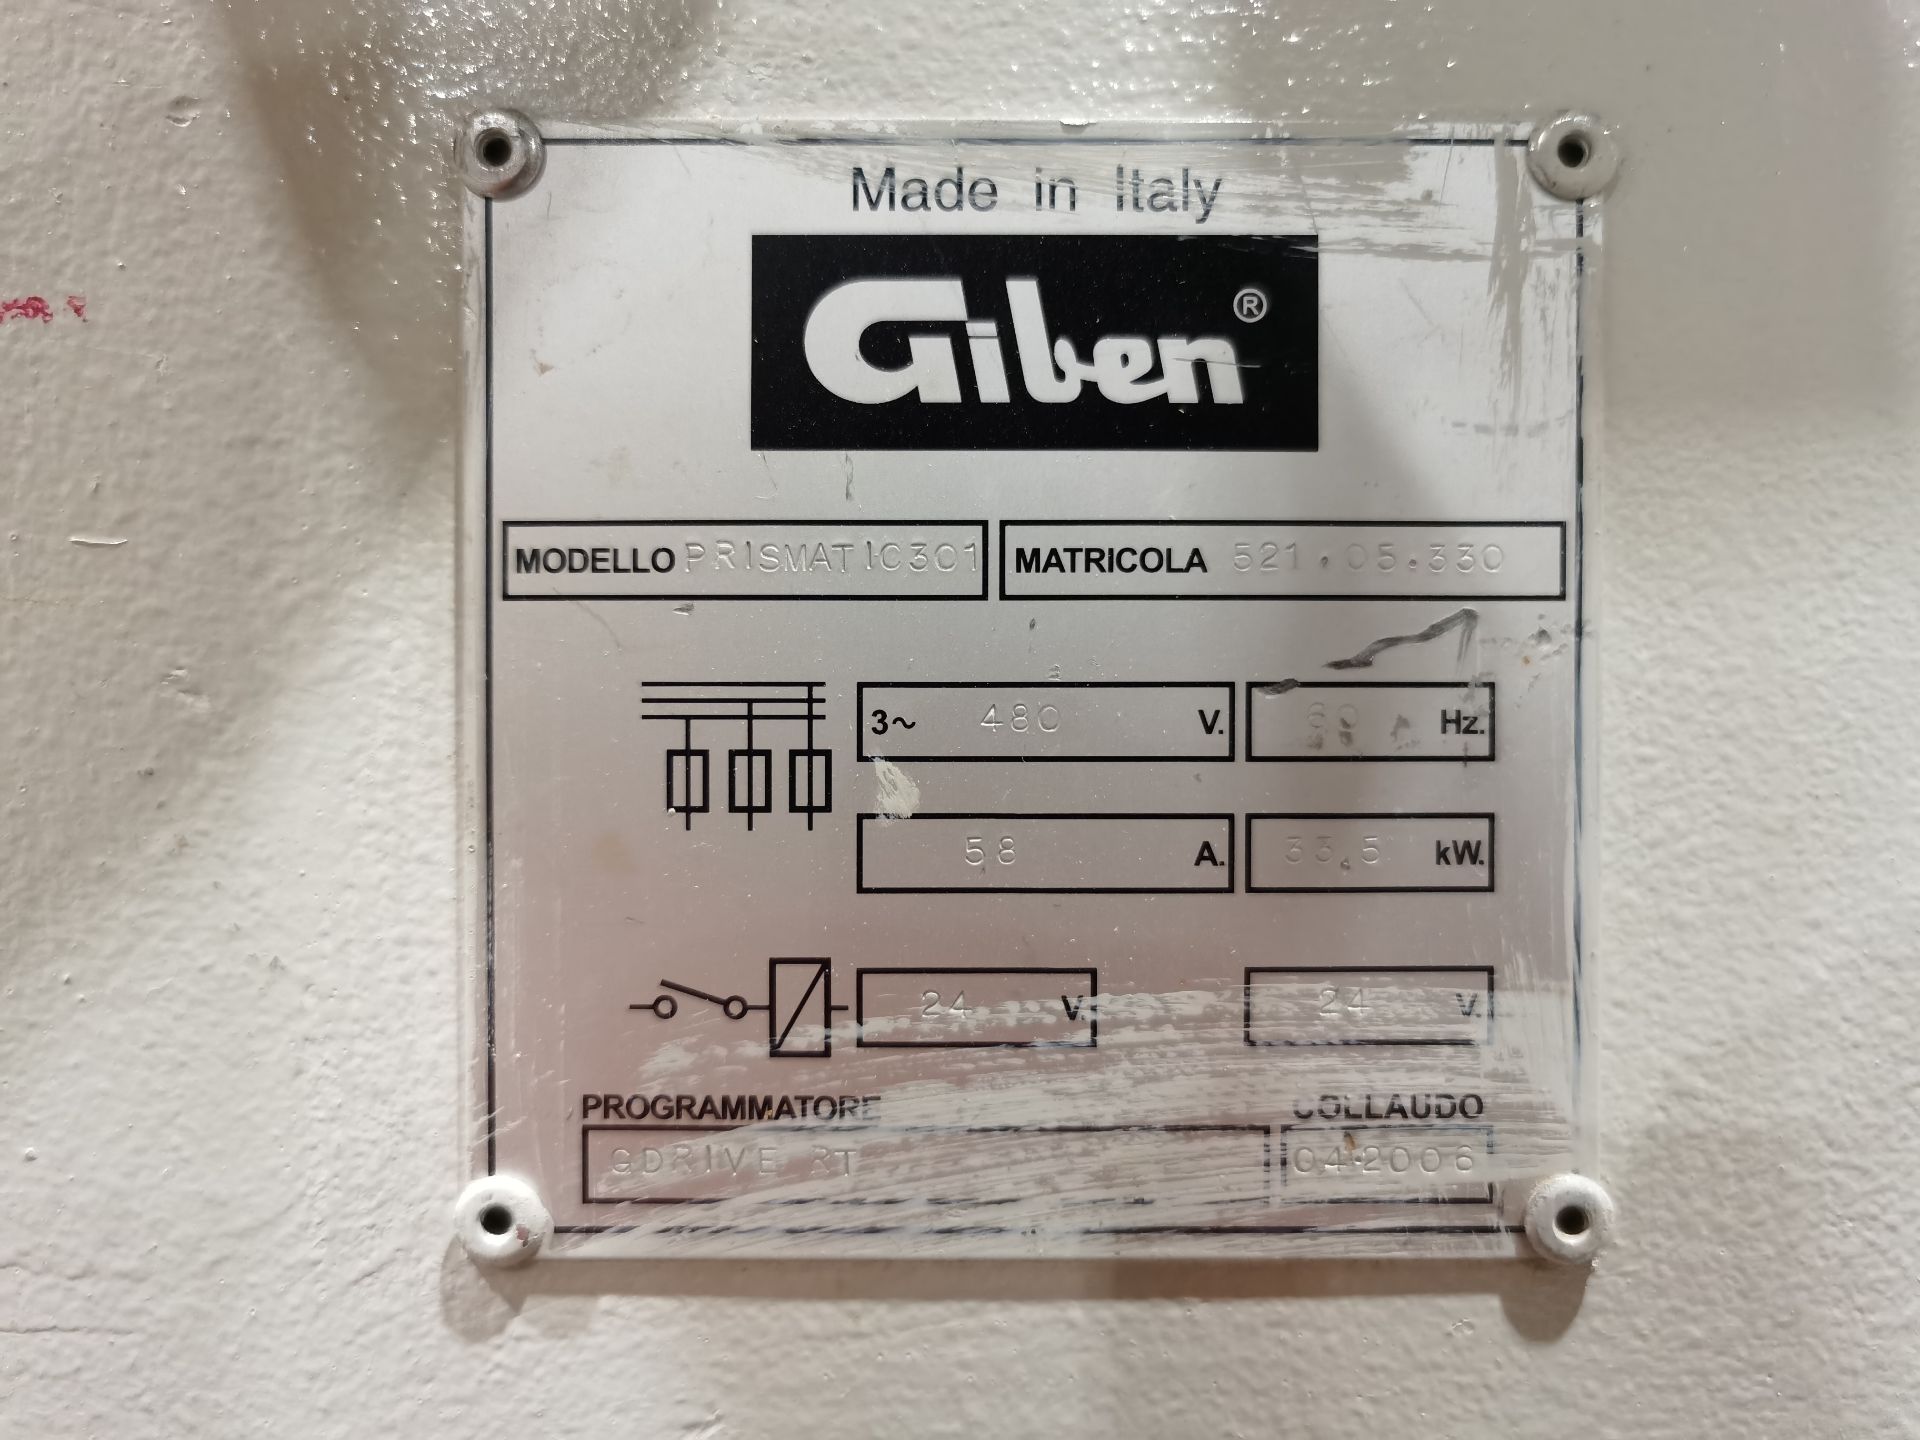 Giben Beam Saw Machine, Model PRISMATIC 301 SPT, S/N 521.05.330, Year 2006, 480 V / 60 Hz - Image 12 of 38